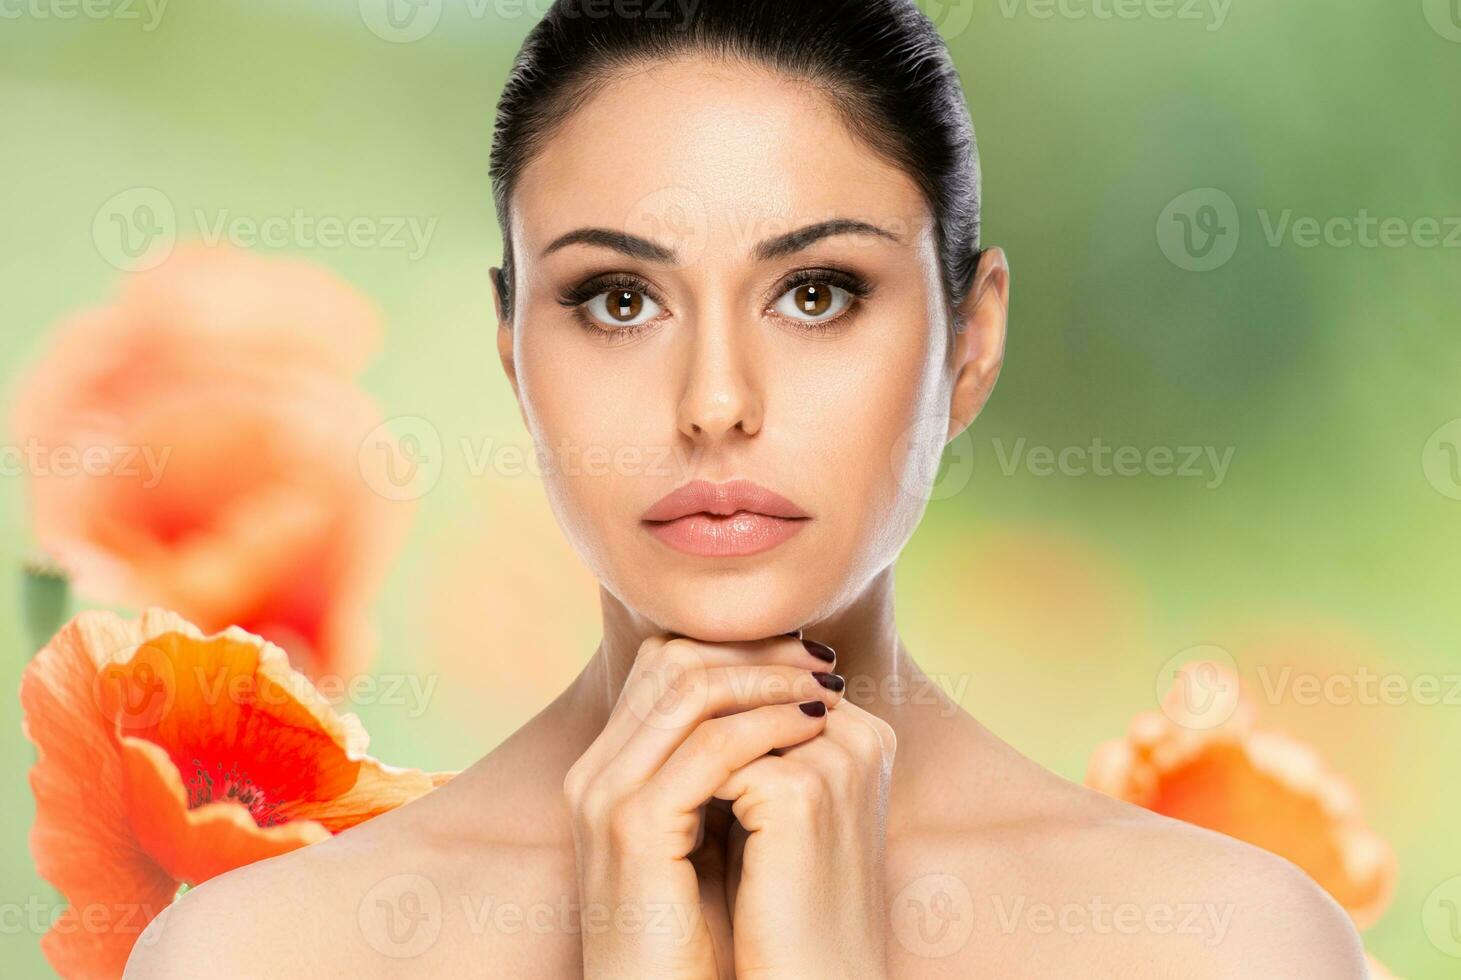 lindo mulher face retrato sobre floresceu borrado fundo. beleza pele Cuidado conceito. foto